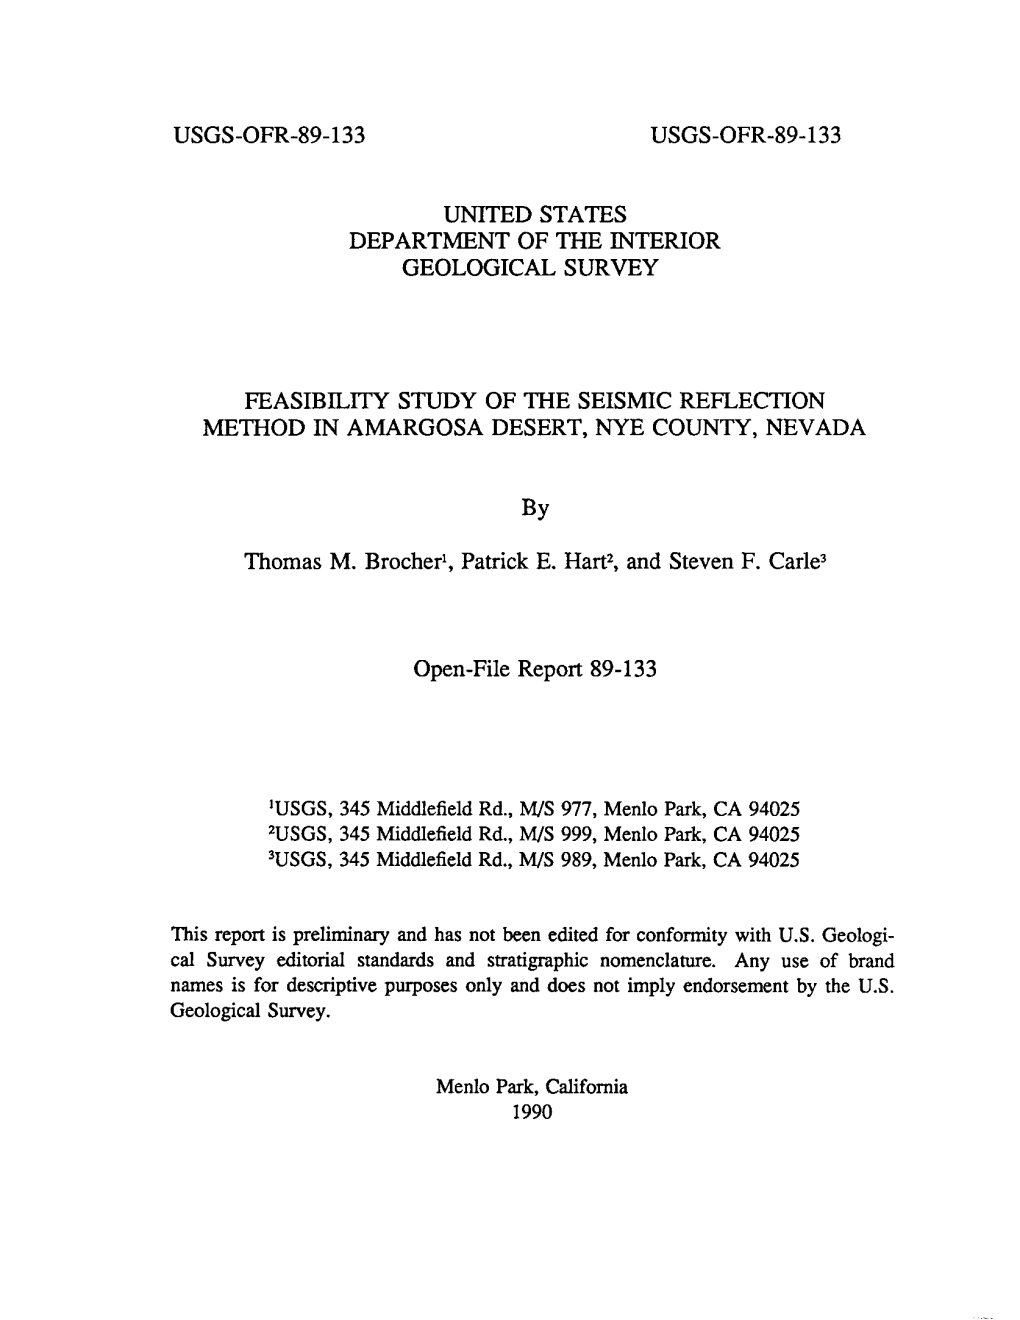 USGS Open-File Report 89-133